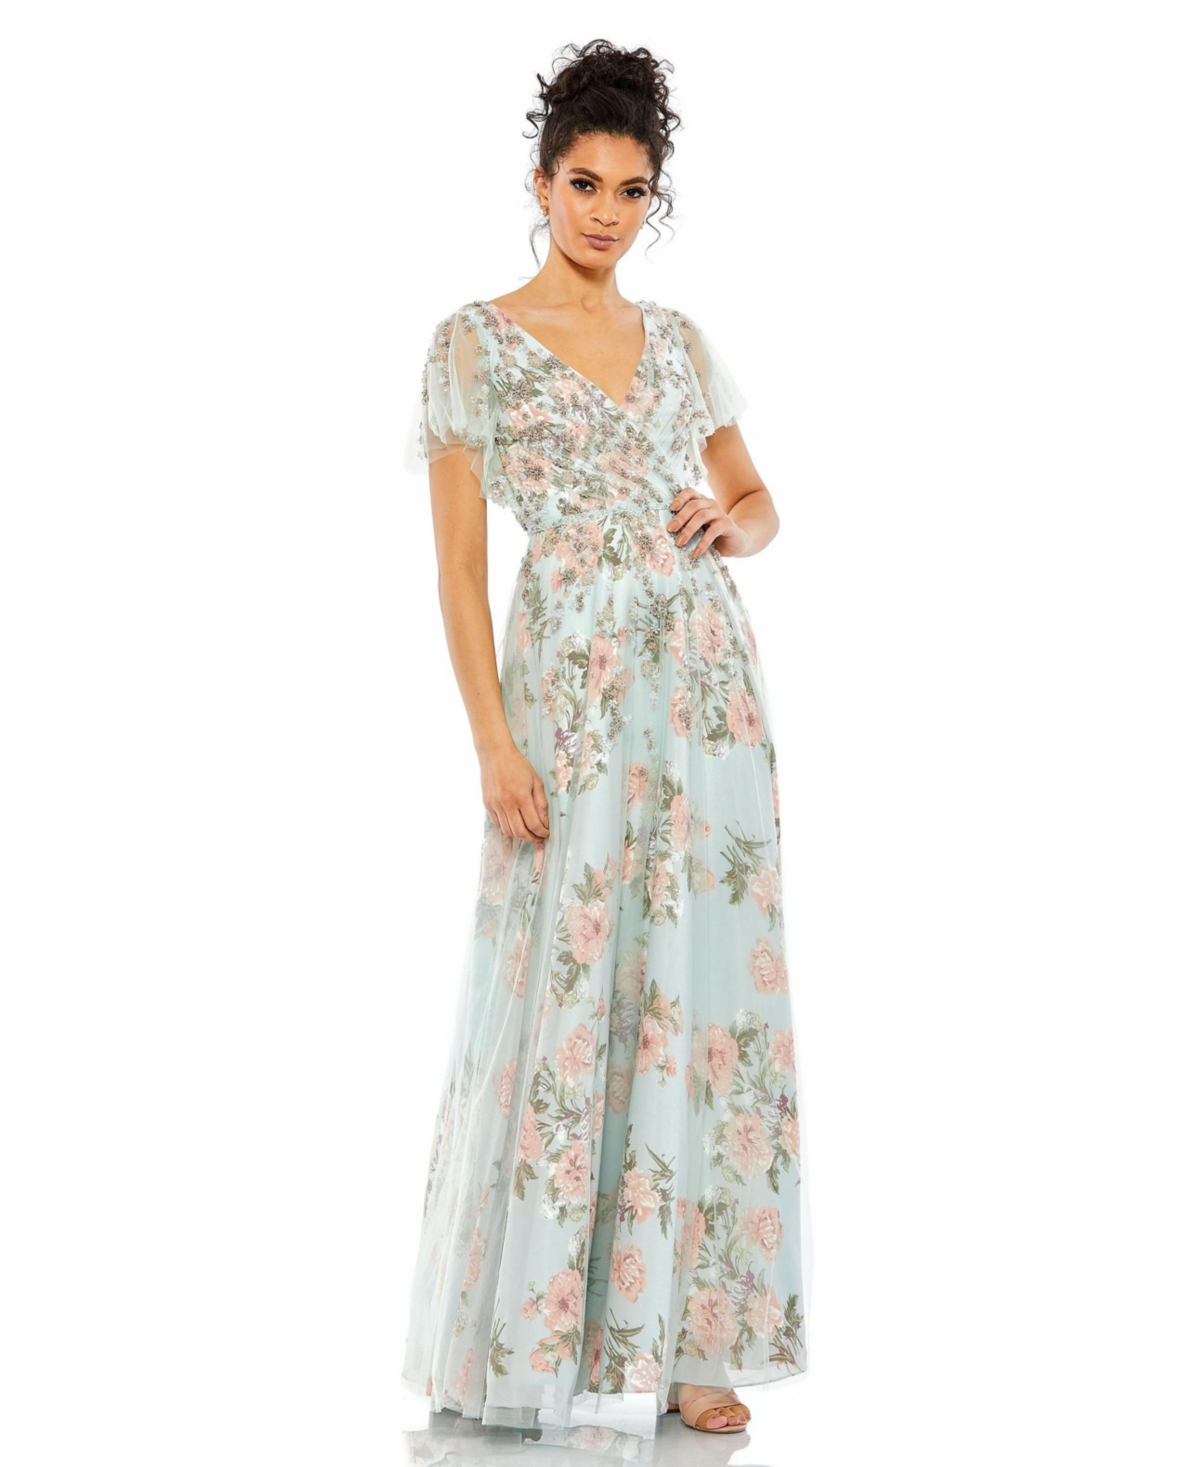 1930s Clothing and Fashion for Women Womens Floral Flutter Sleeve V-Neck Maxi Dress - Blue multi $458.00 AT vintagedancer.com